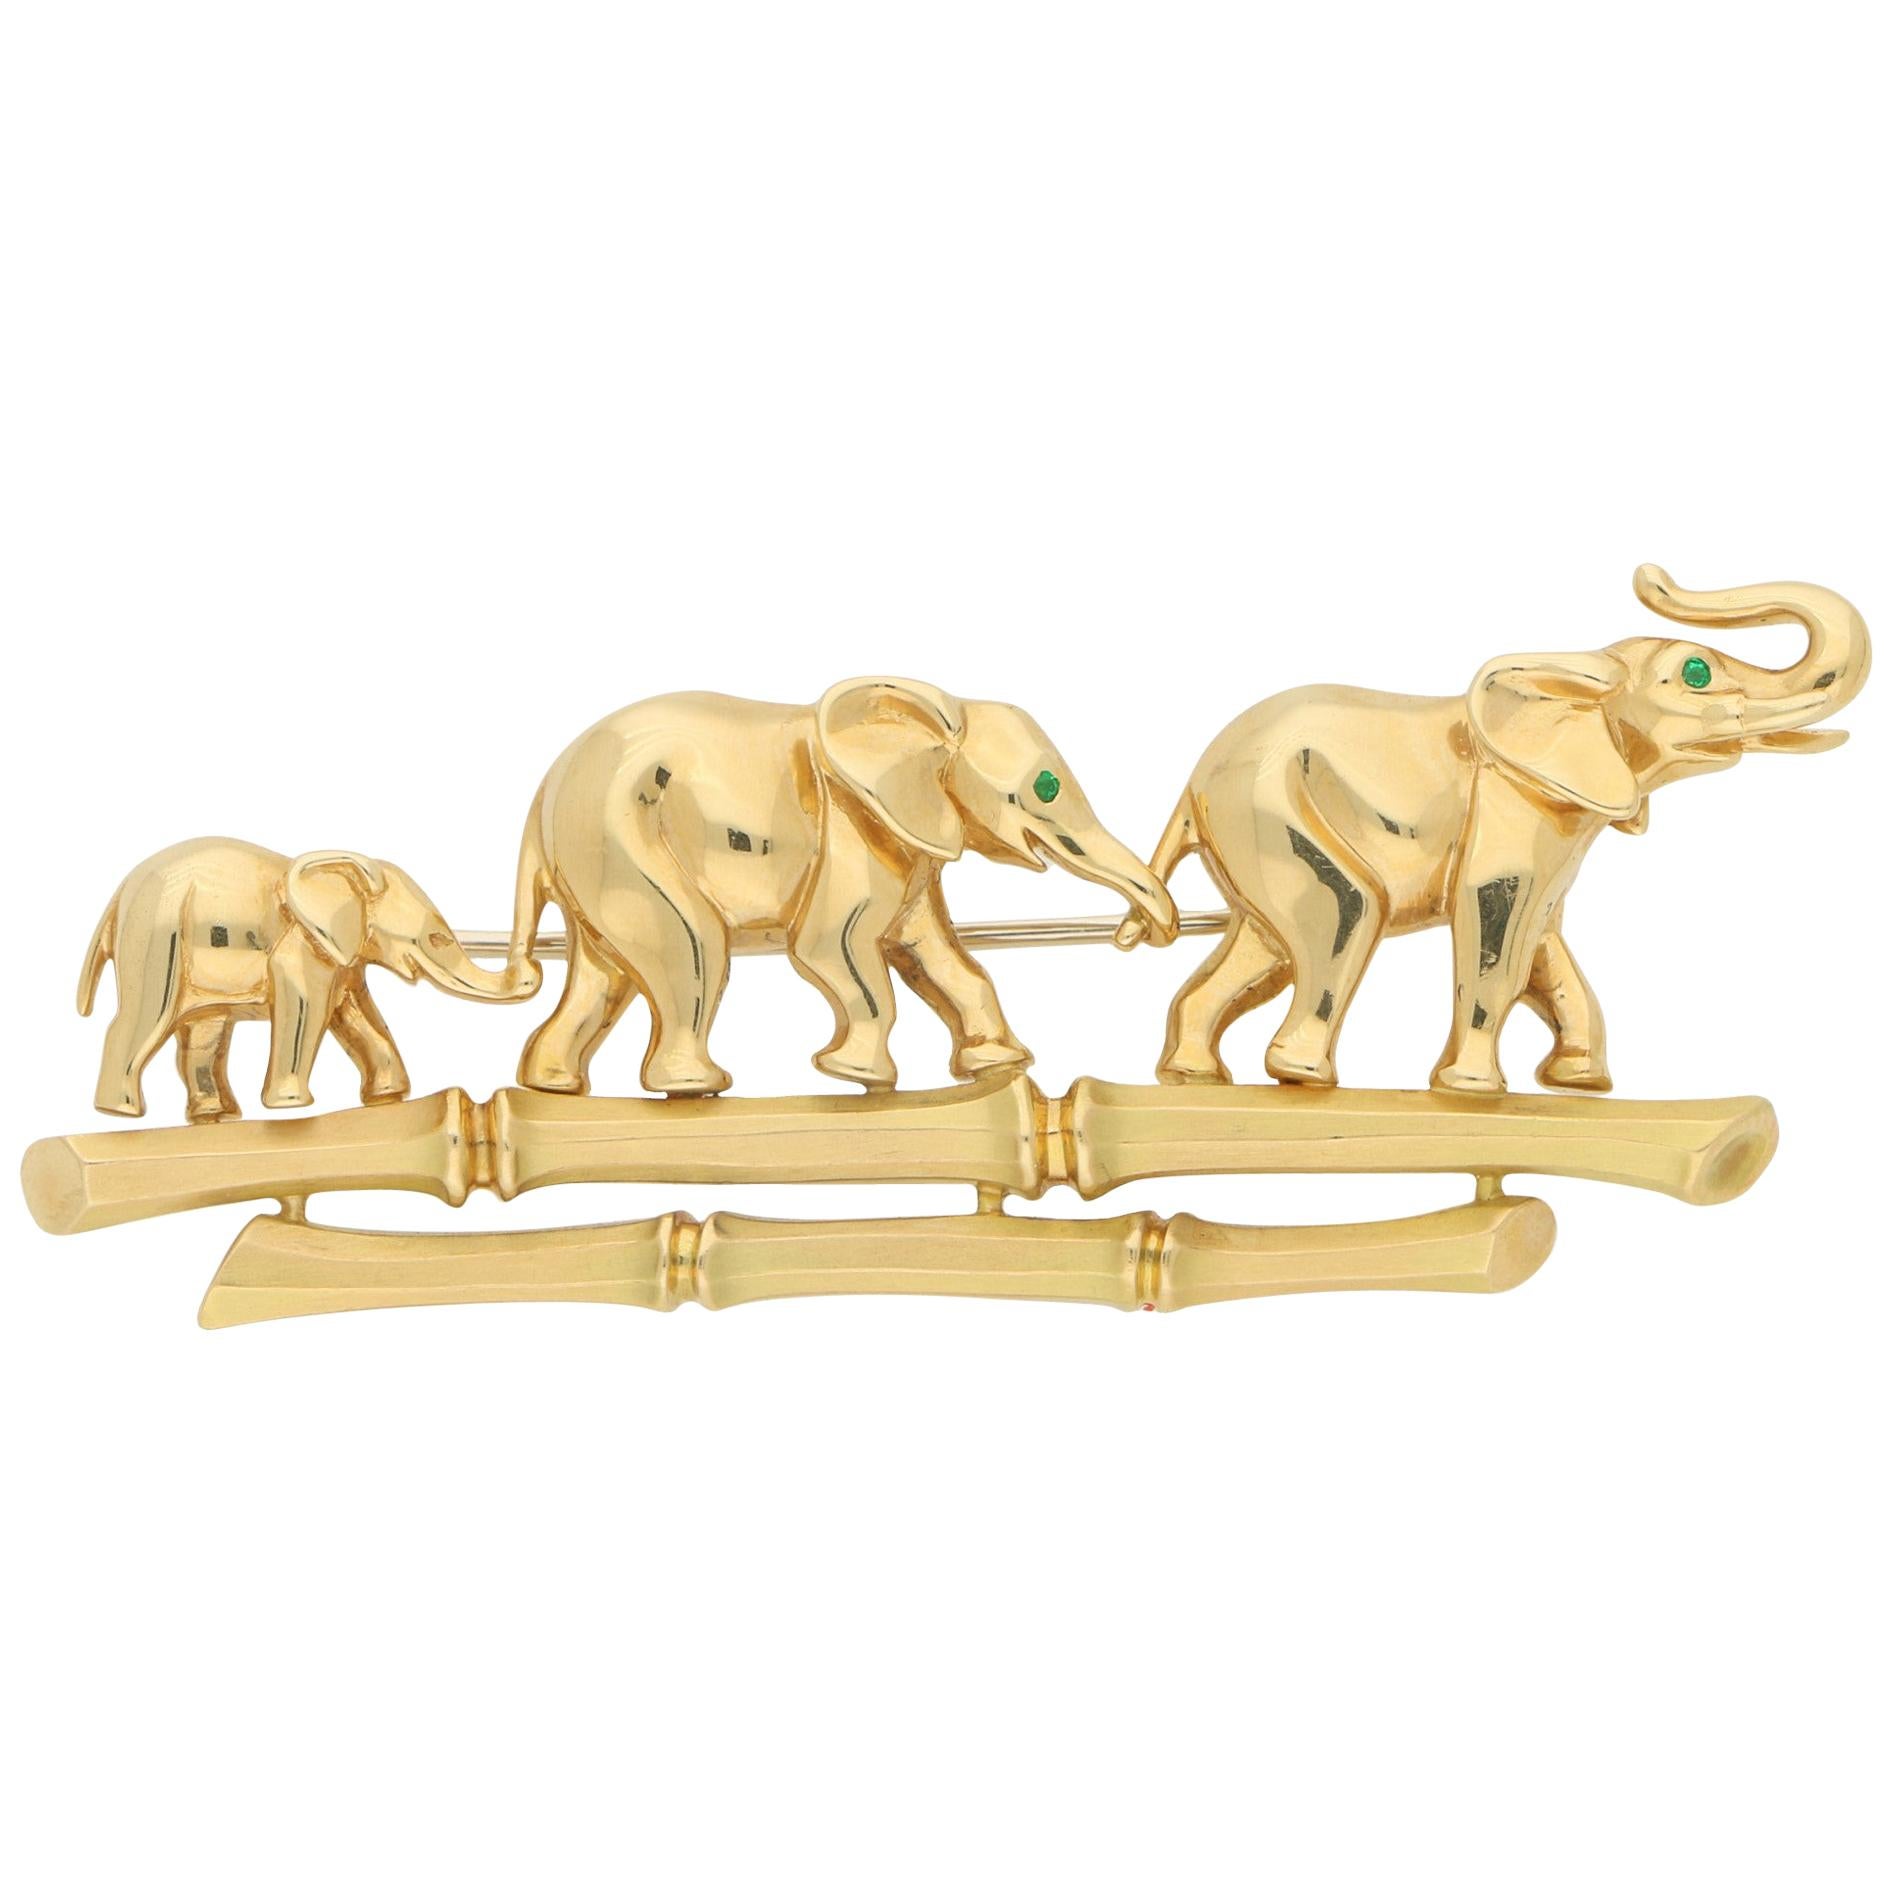 Cartier Emerald Walking Elephant Family Brooch Set in 18 Karat Yellow Gold